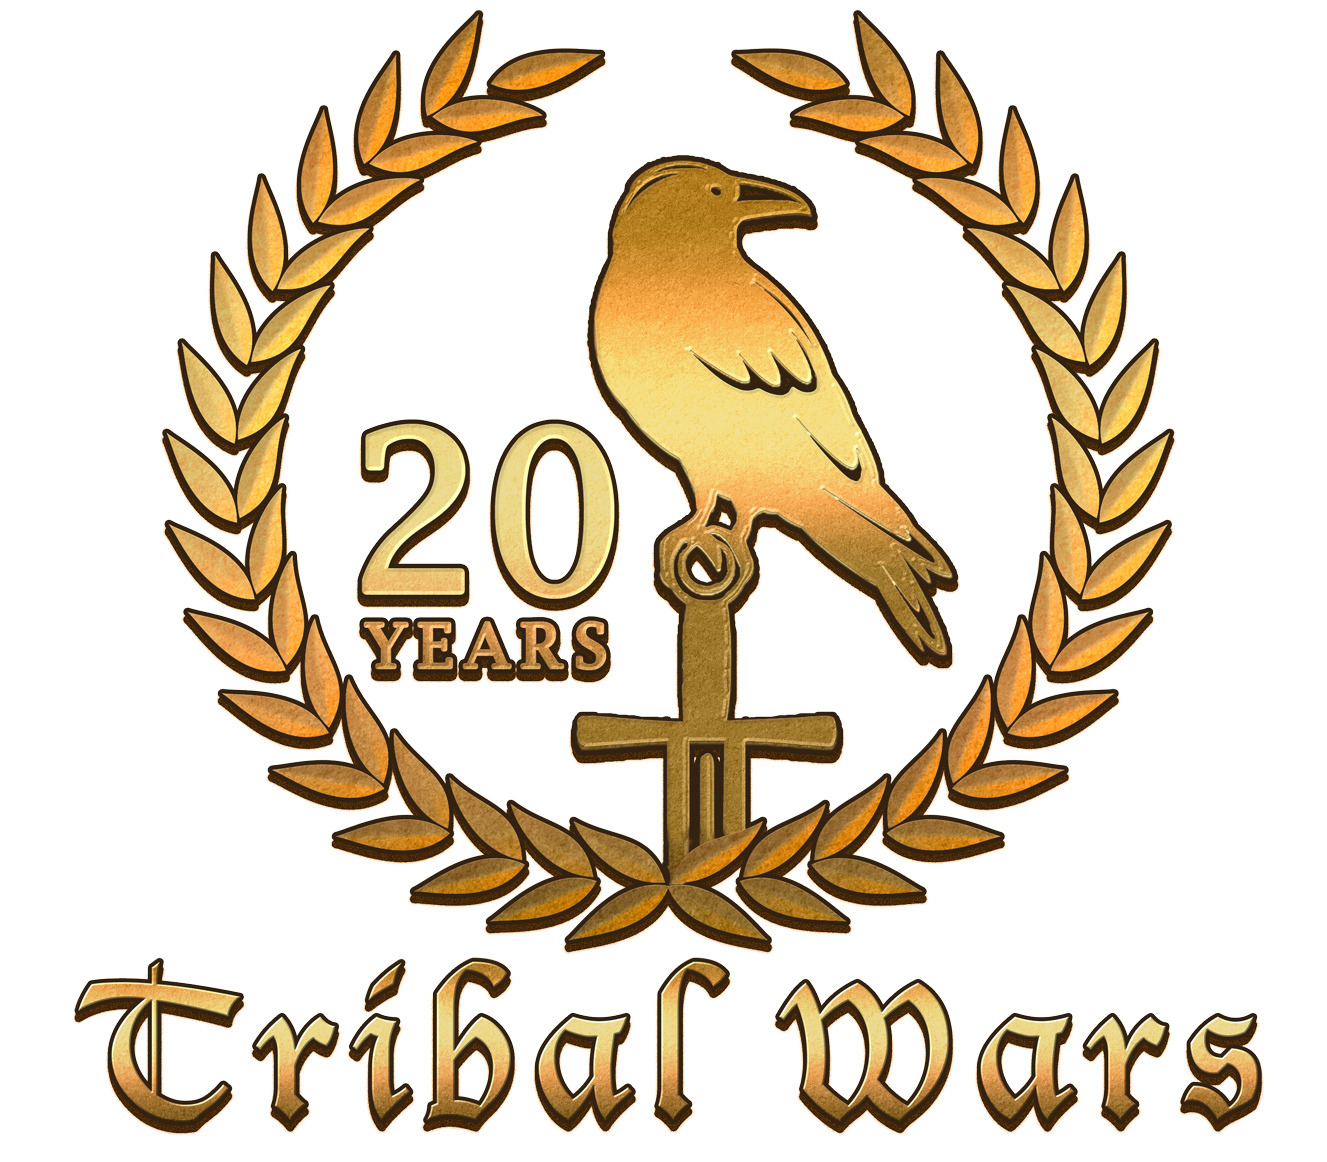 Tribal Wars (2003)